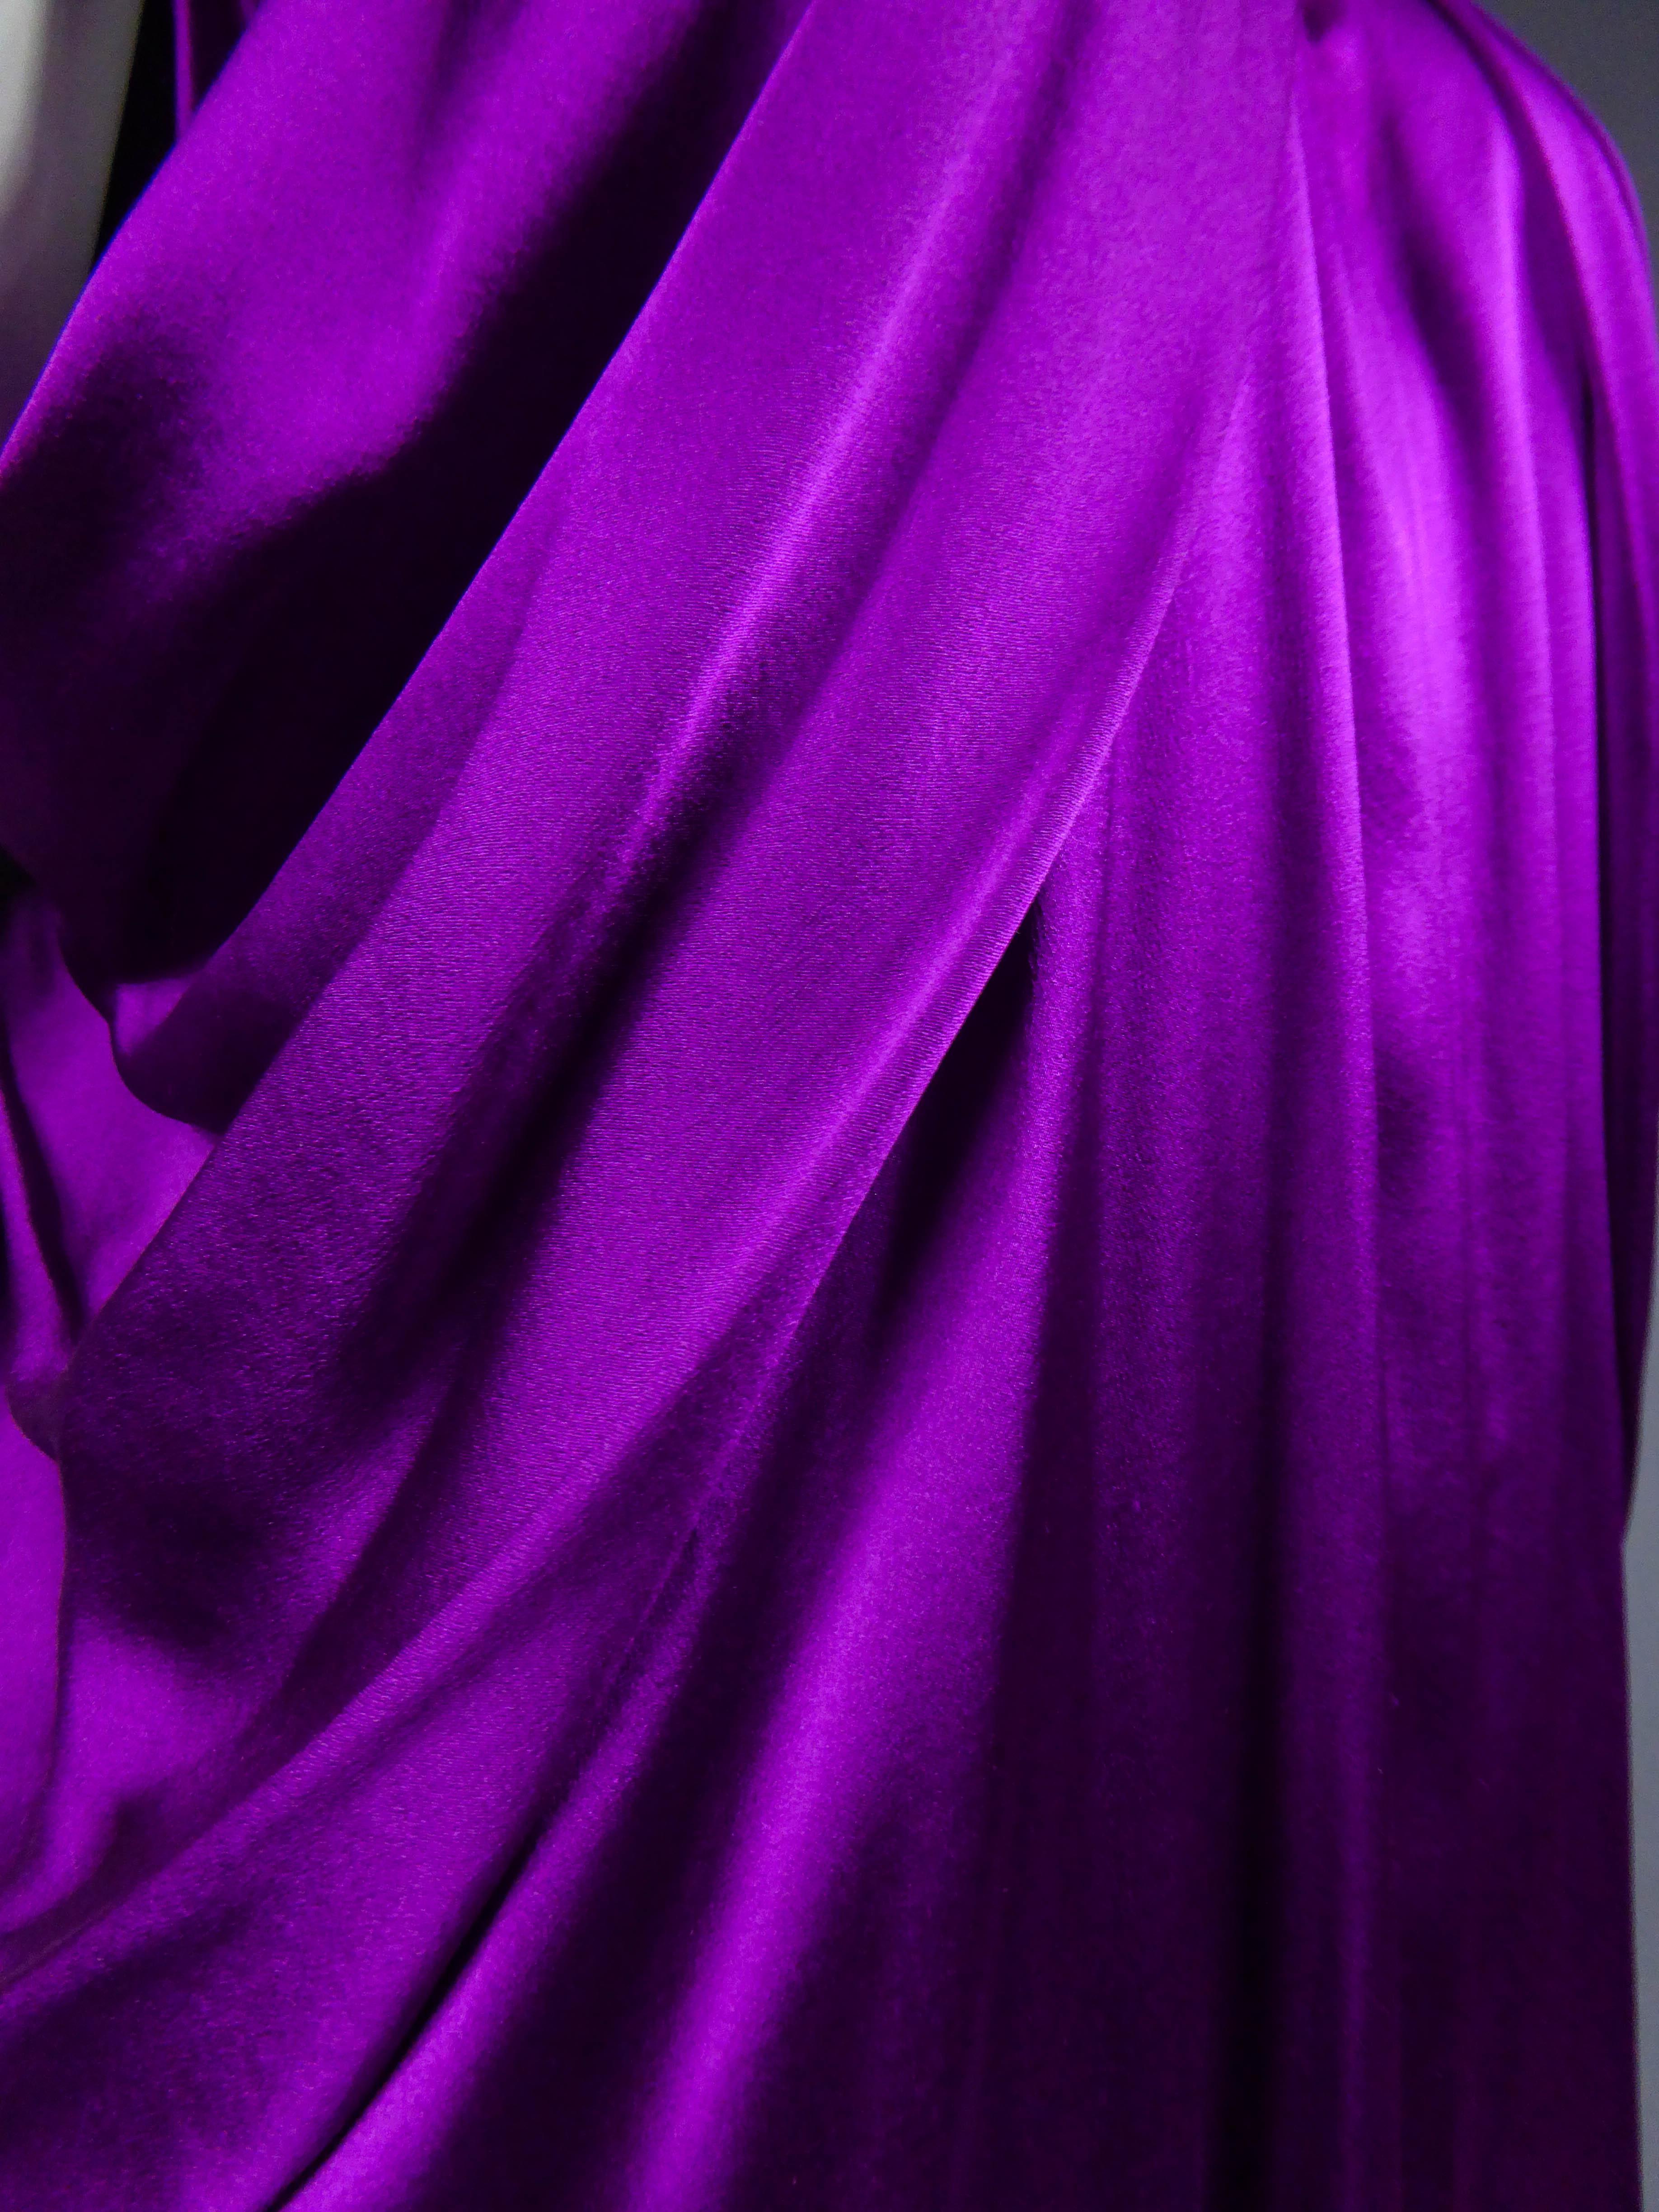 Purple Yves Saint Laurent Satin Dress by Stefano Pilati, 2008 Collection  For Sale